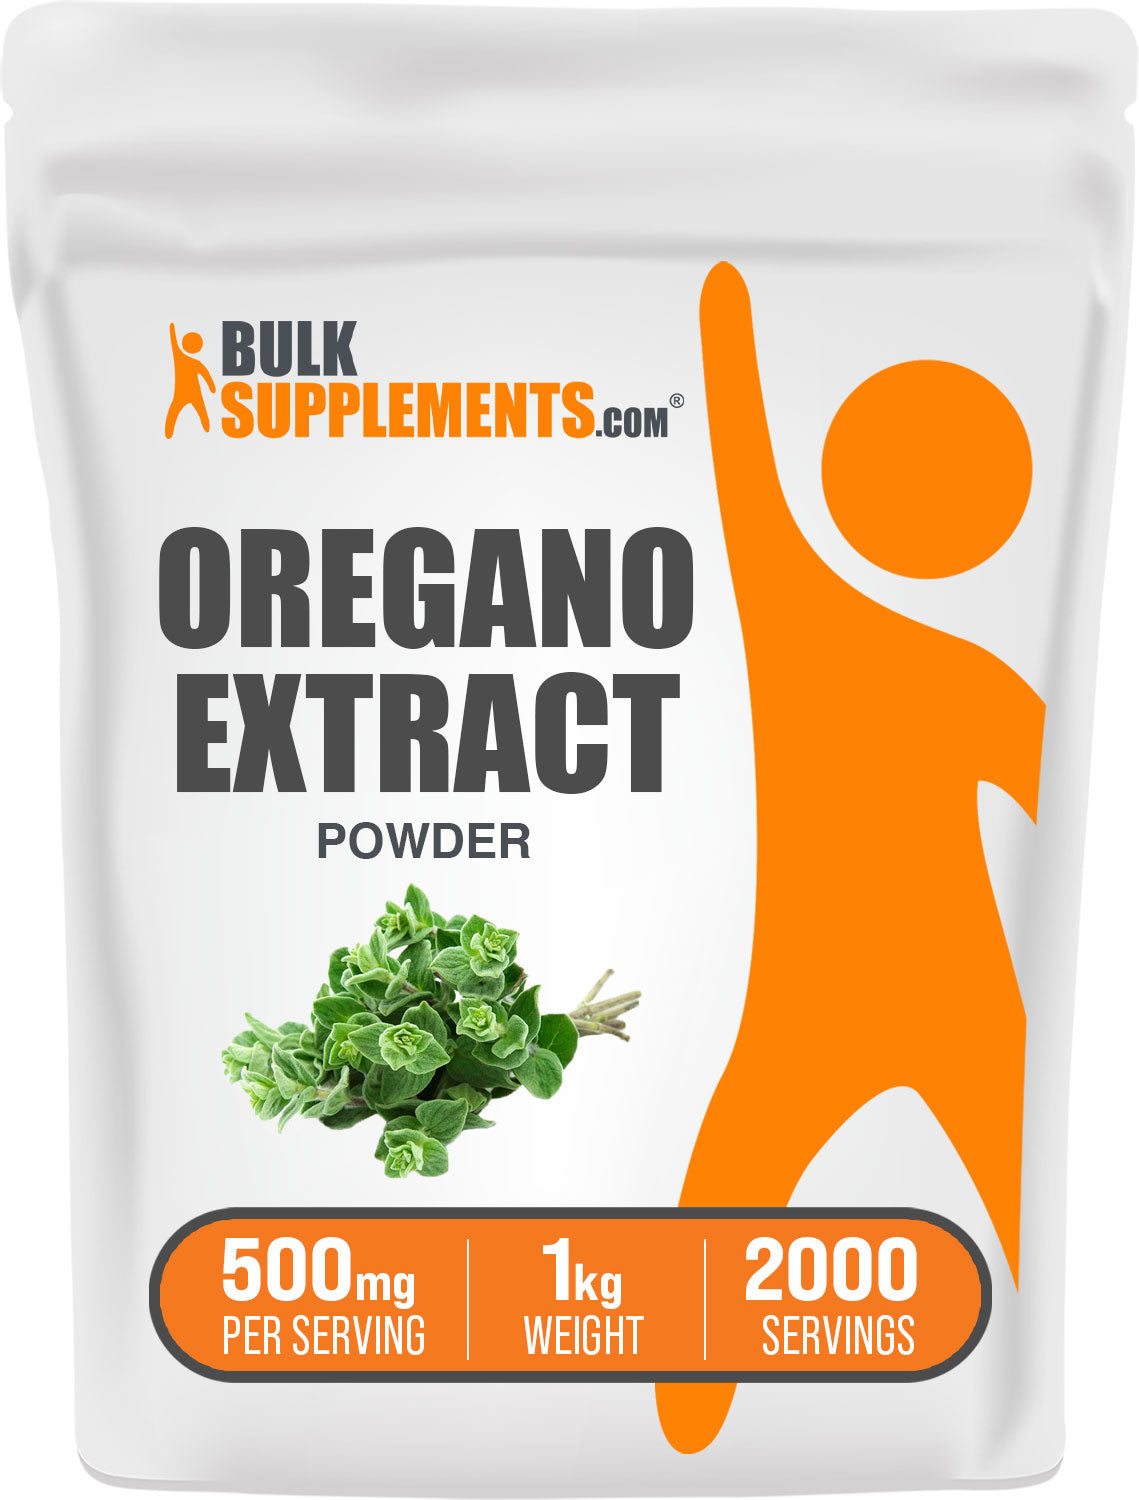 BulkSupplements Oregano Extract Powder 1kg bag